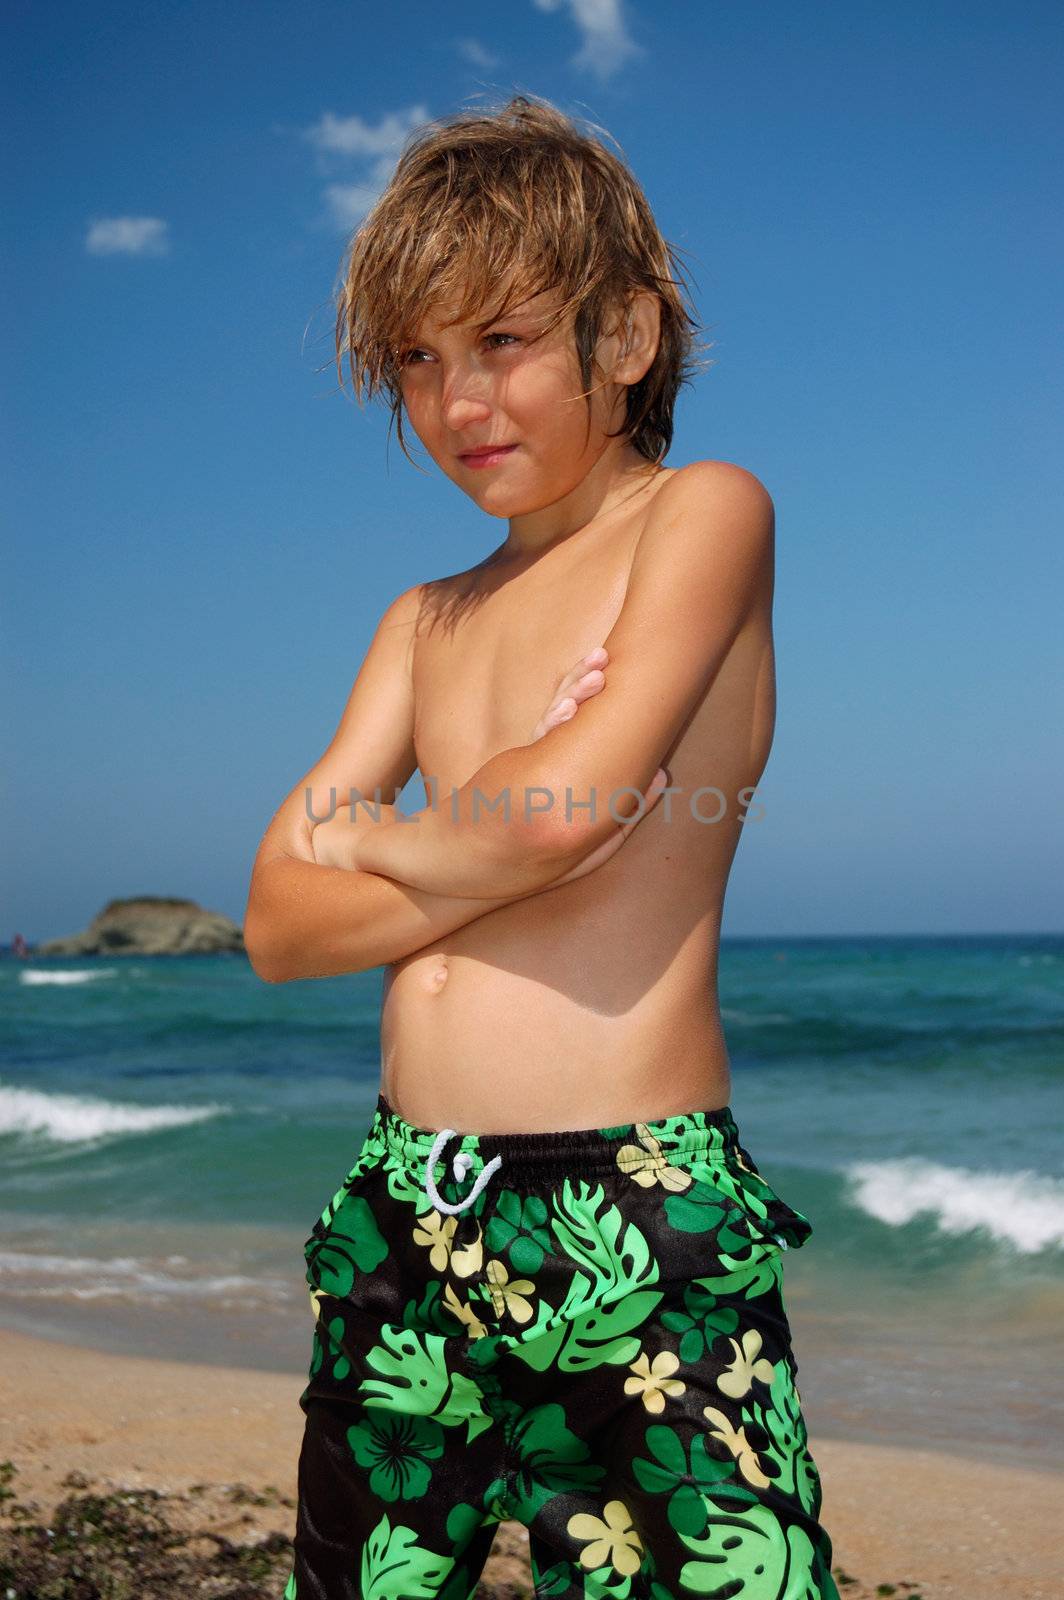 sunburn boy at the beach